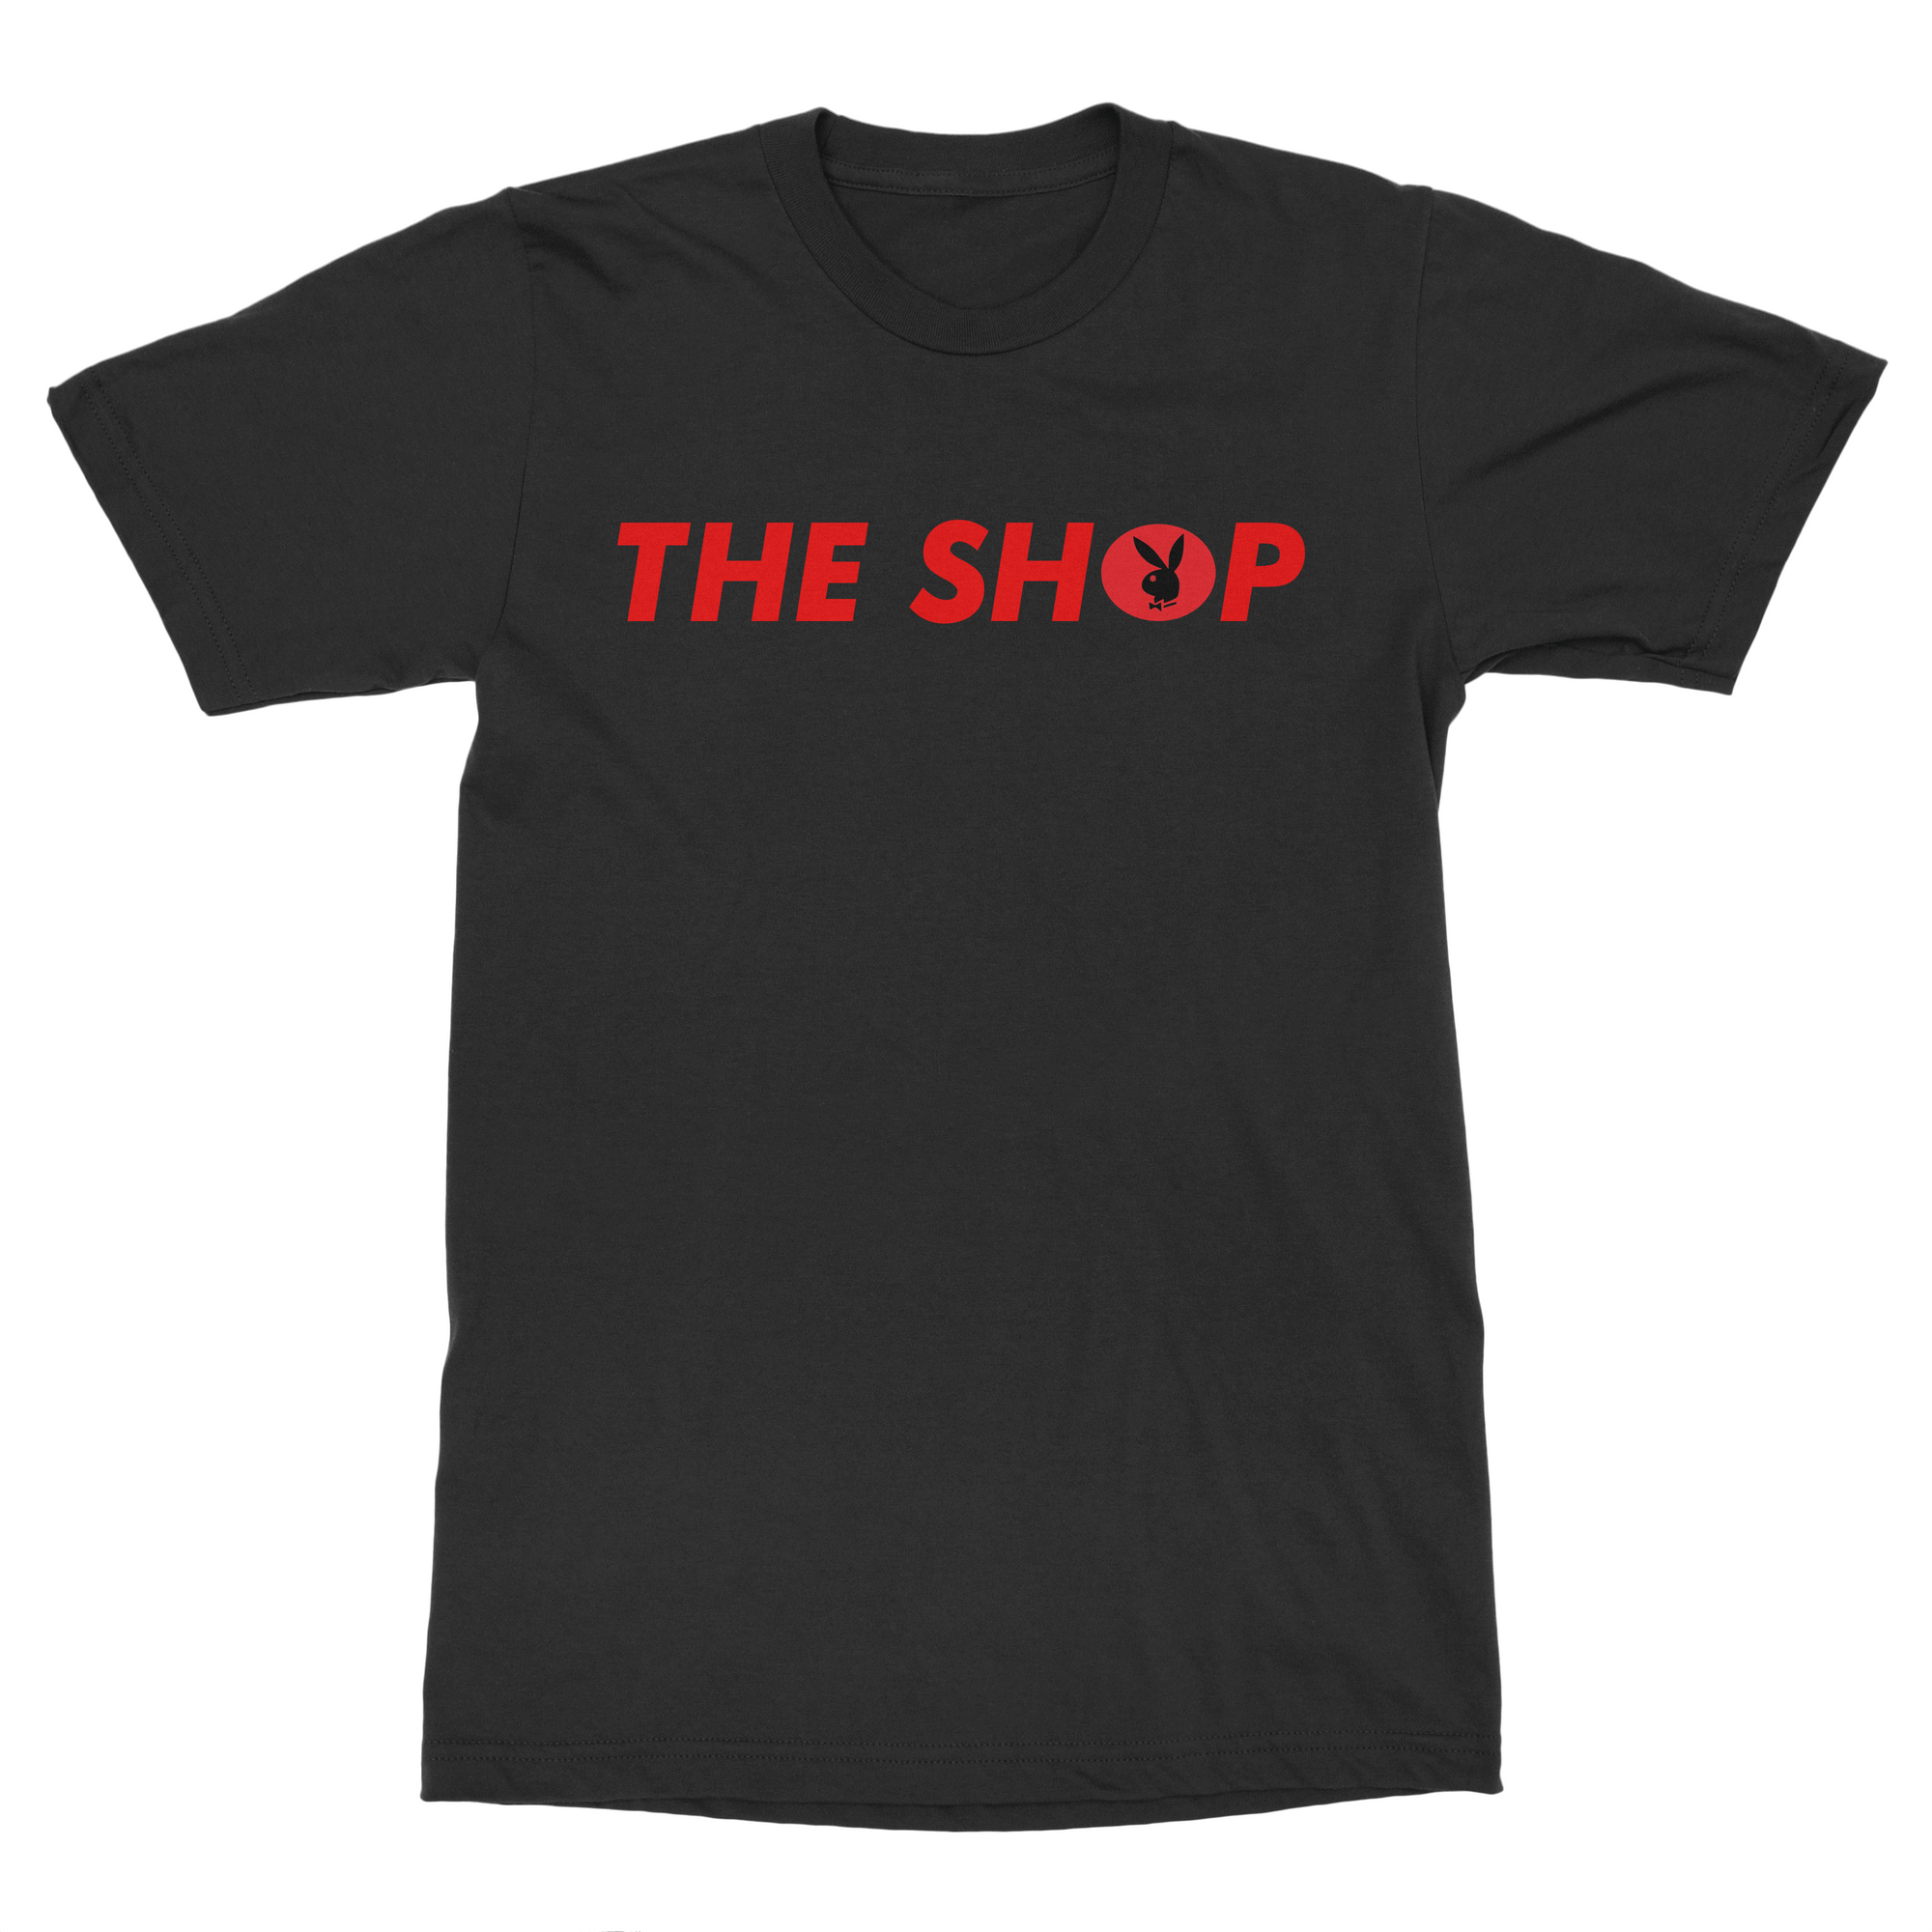 The Shop PB Shirt |Shirts |$19.99 |TSP The Shop | The Shop PB Shirt | The Shop Pro Scooter Lab | Playboy | Bunny